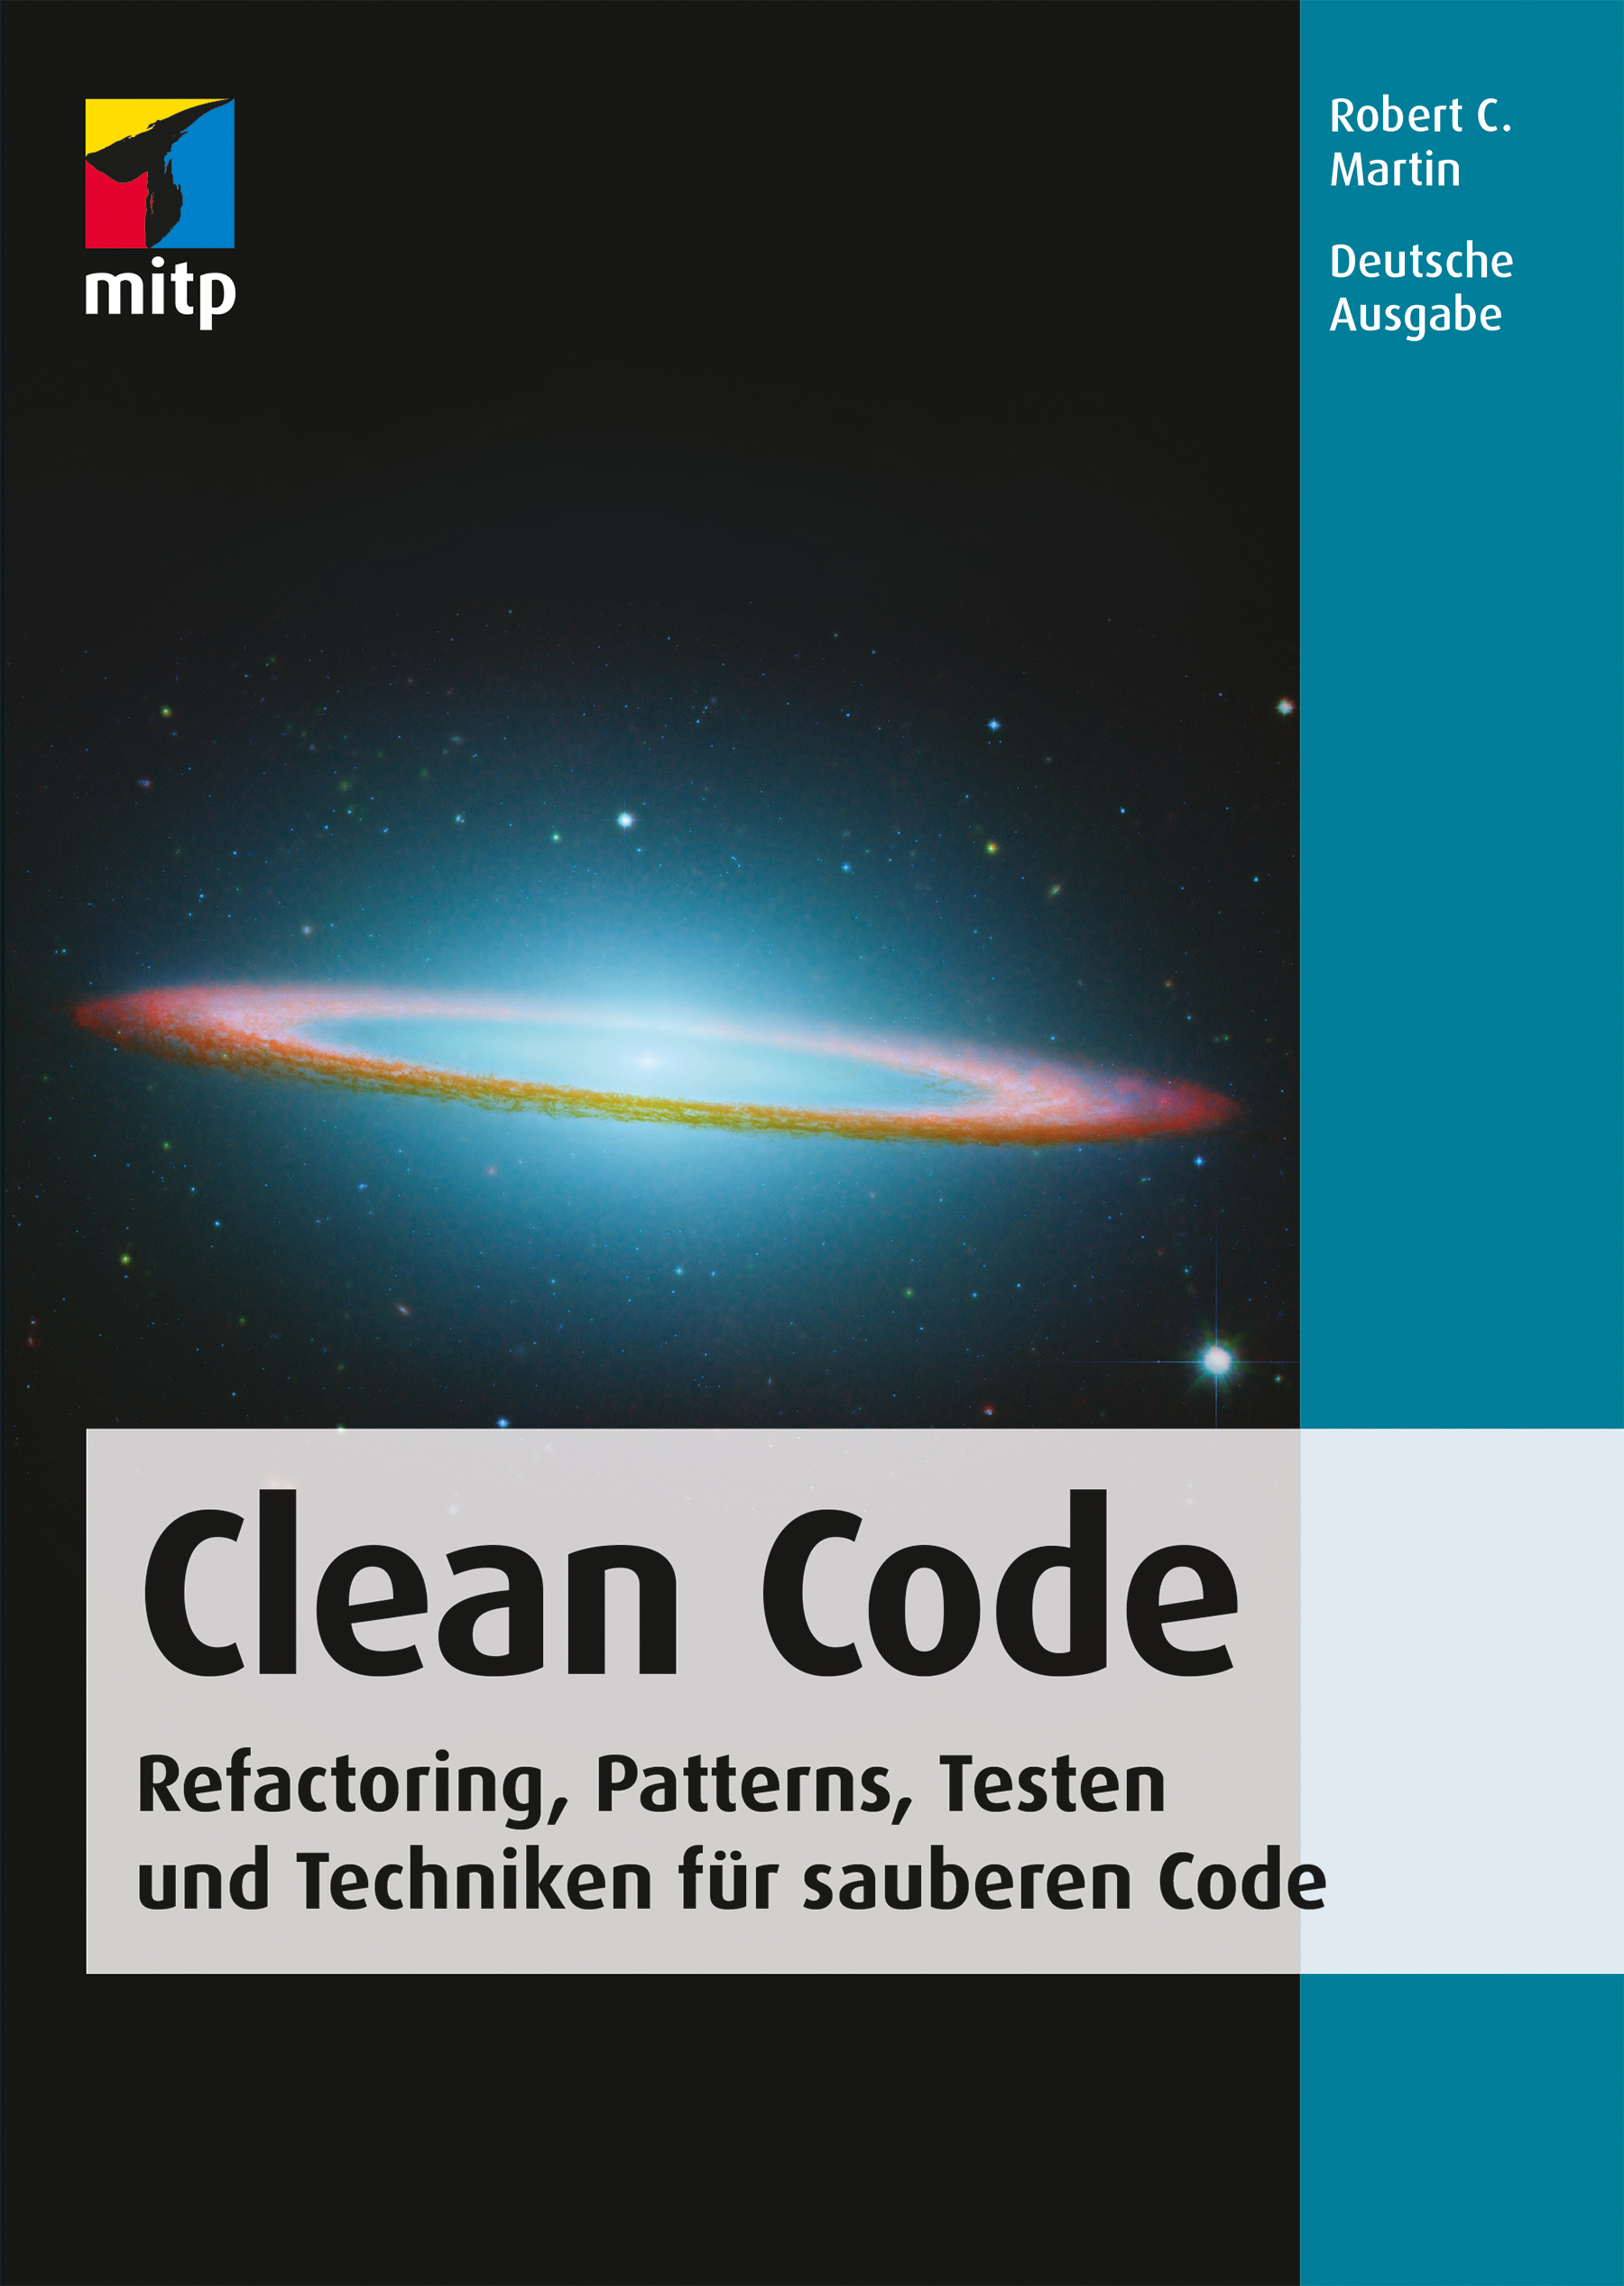 clean code pdf download